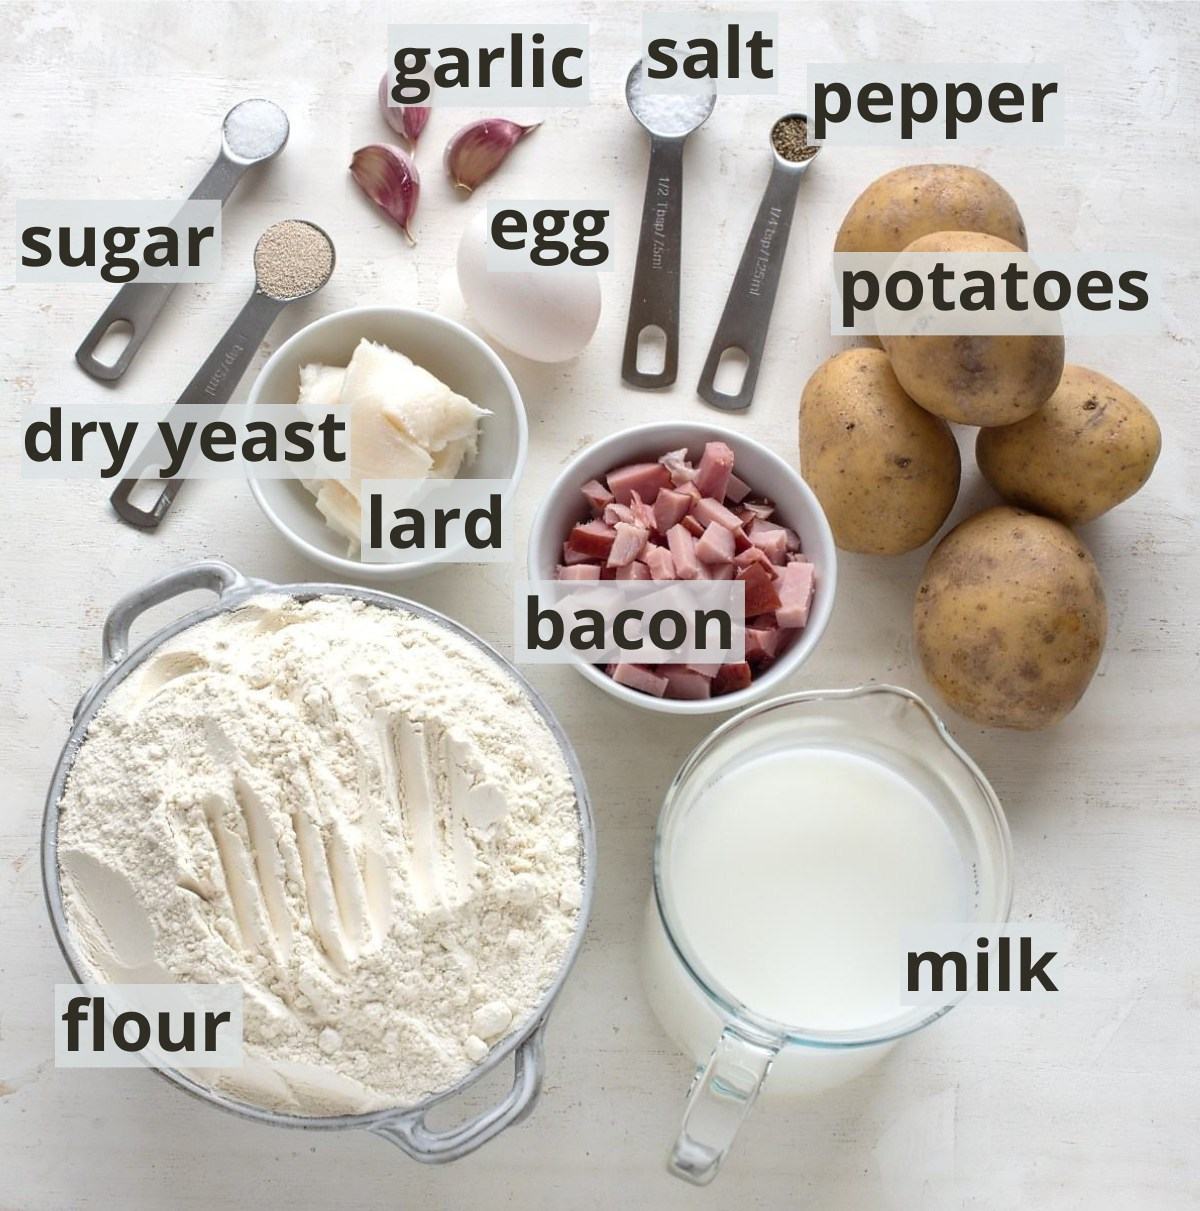 Ingredients for Czech savory potato cake, inclusive captions.